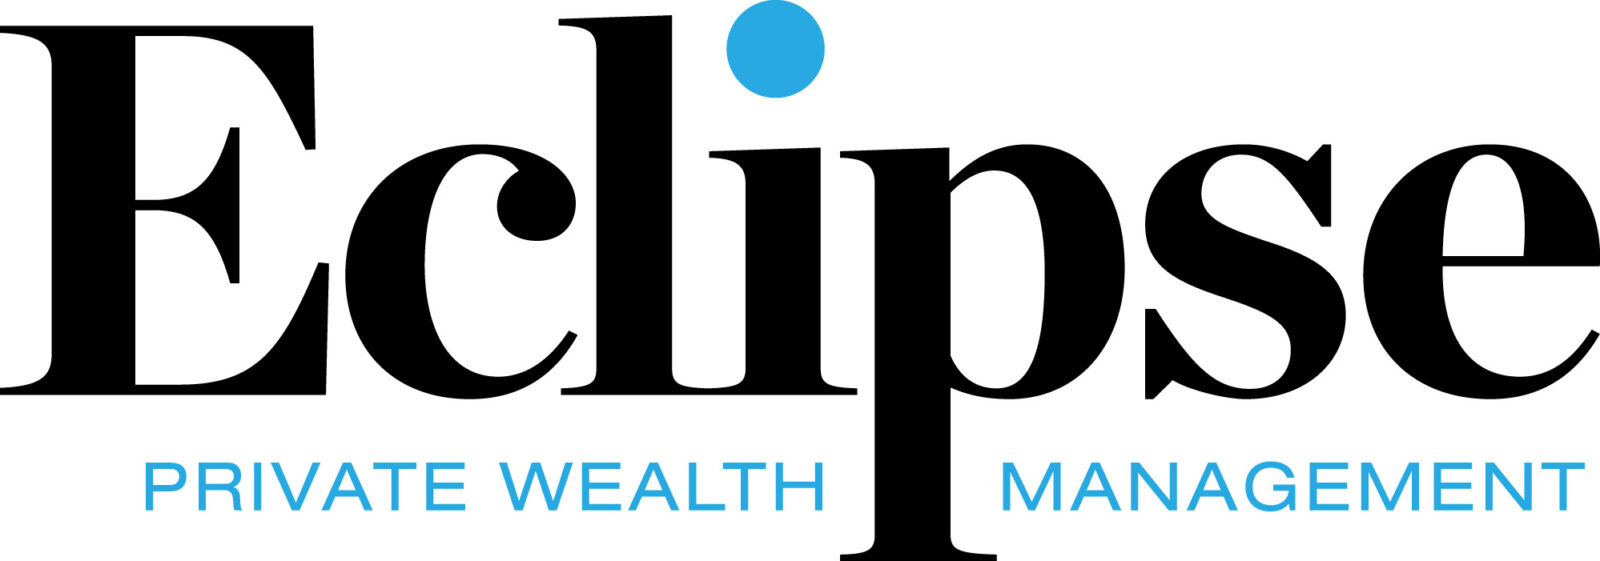 Eclipse Private Wealth Management Logo